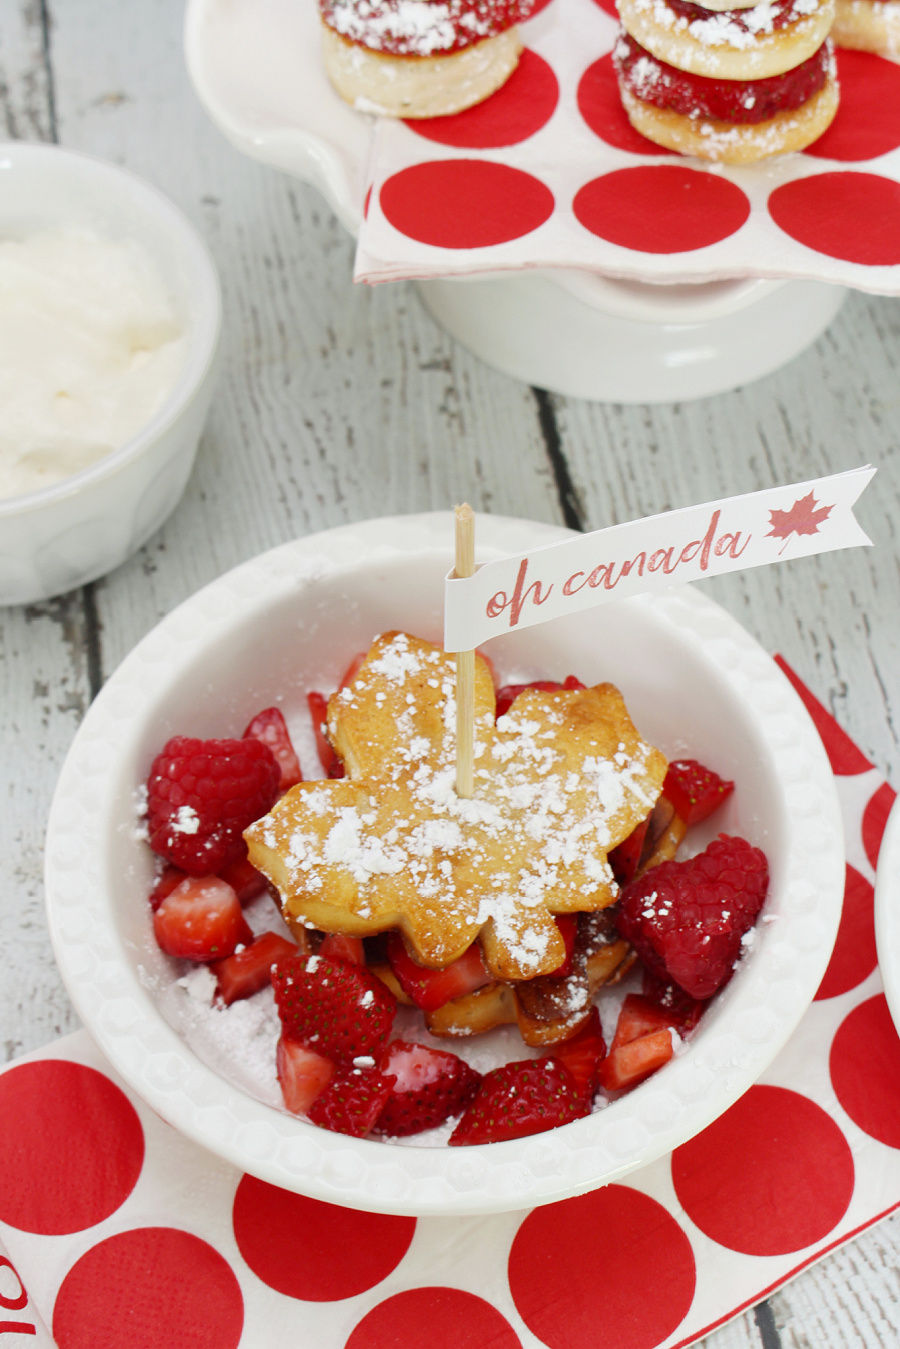 Strawberry shortcake recipe with maple leaf shaped shortcake for Canada Day.